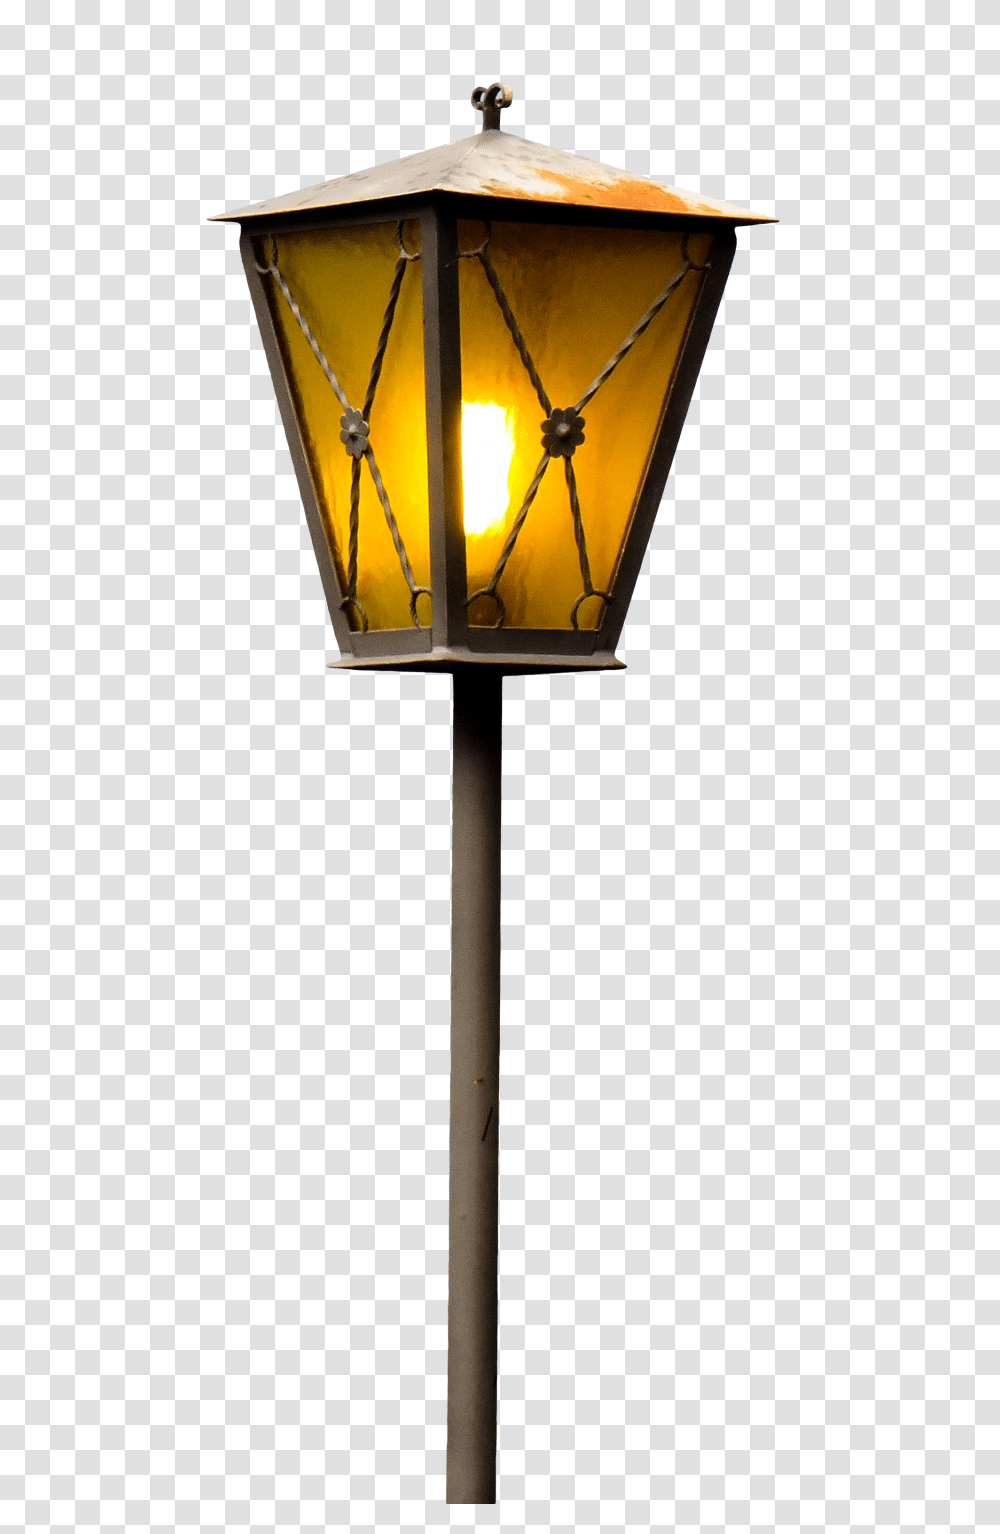 Download Street Light File Hq Image Street Lamp Light, Lampshade, Lamp Post,  Transparent Png